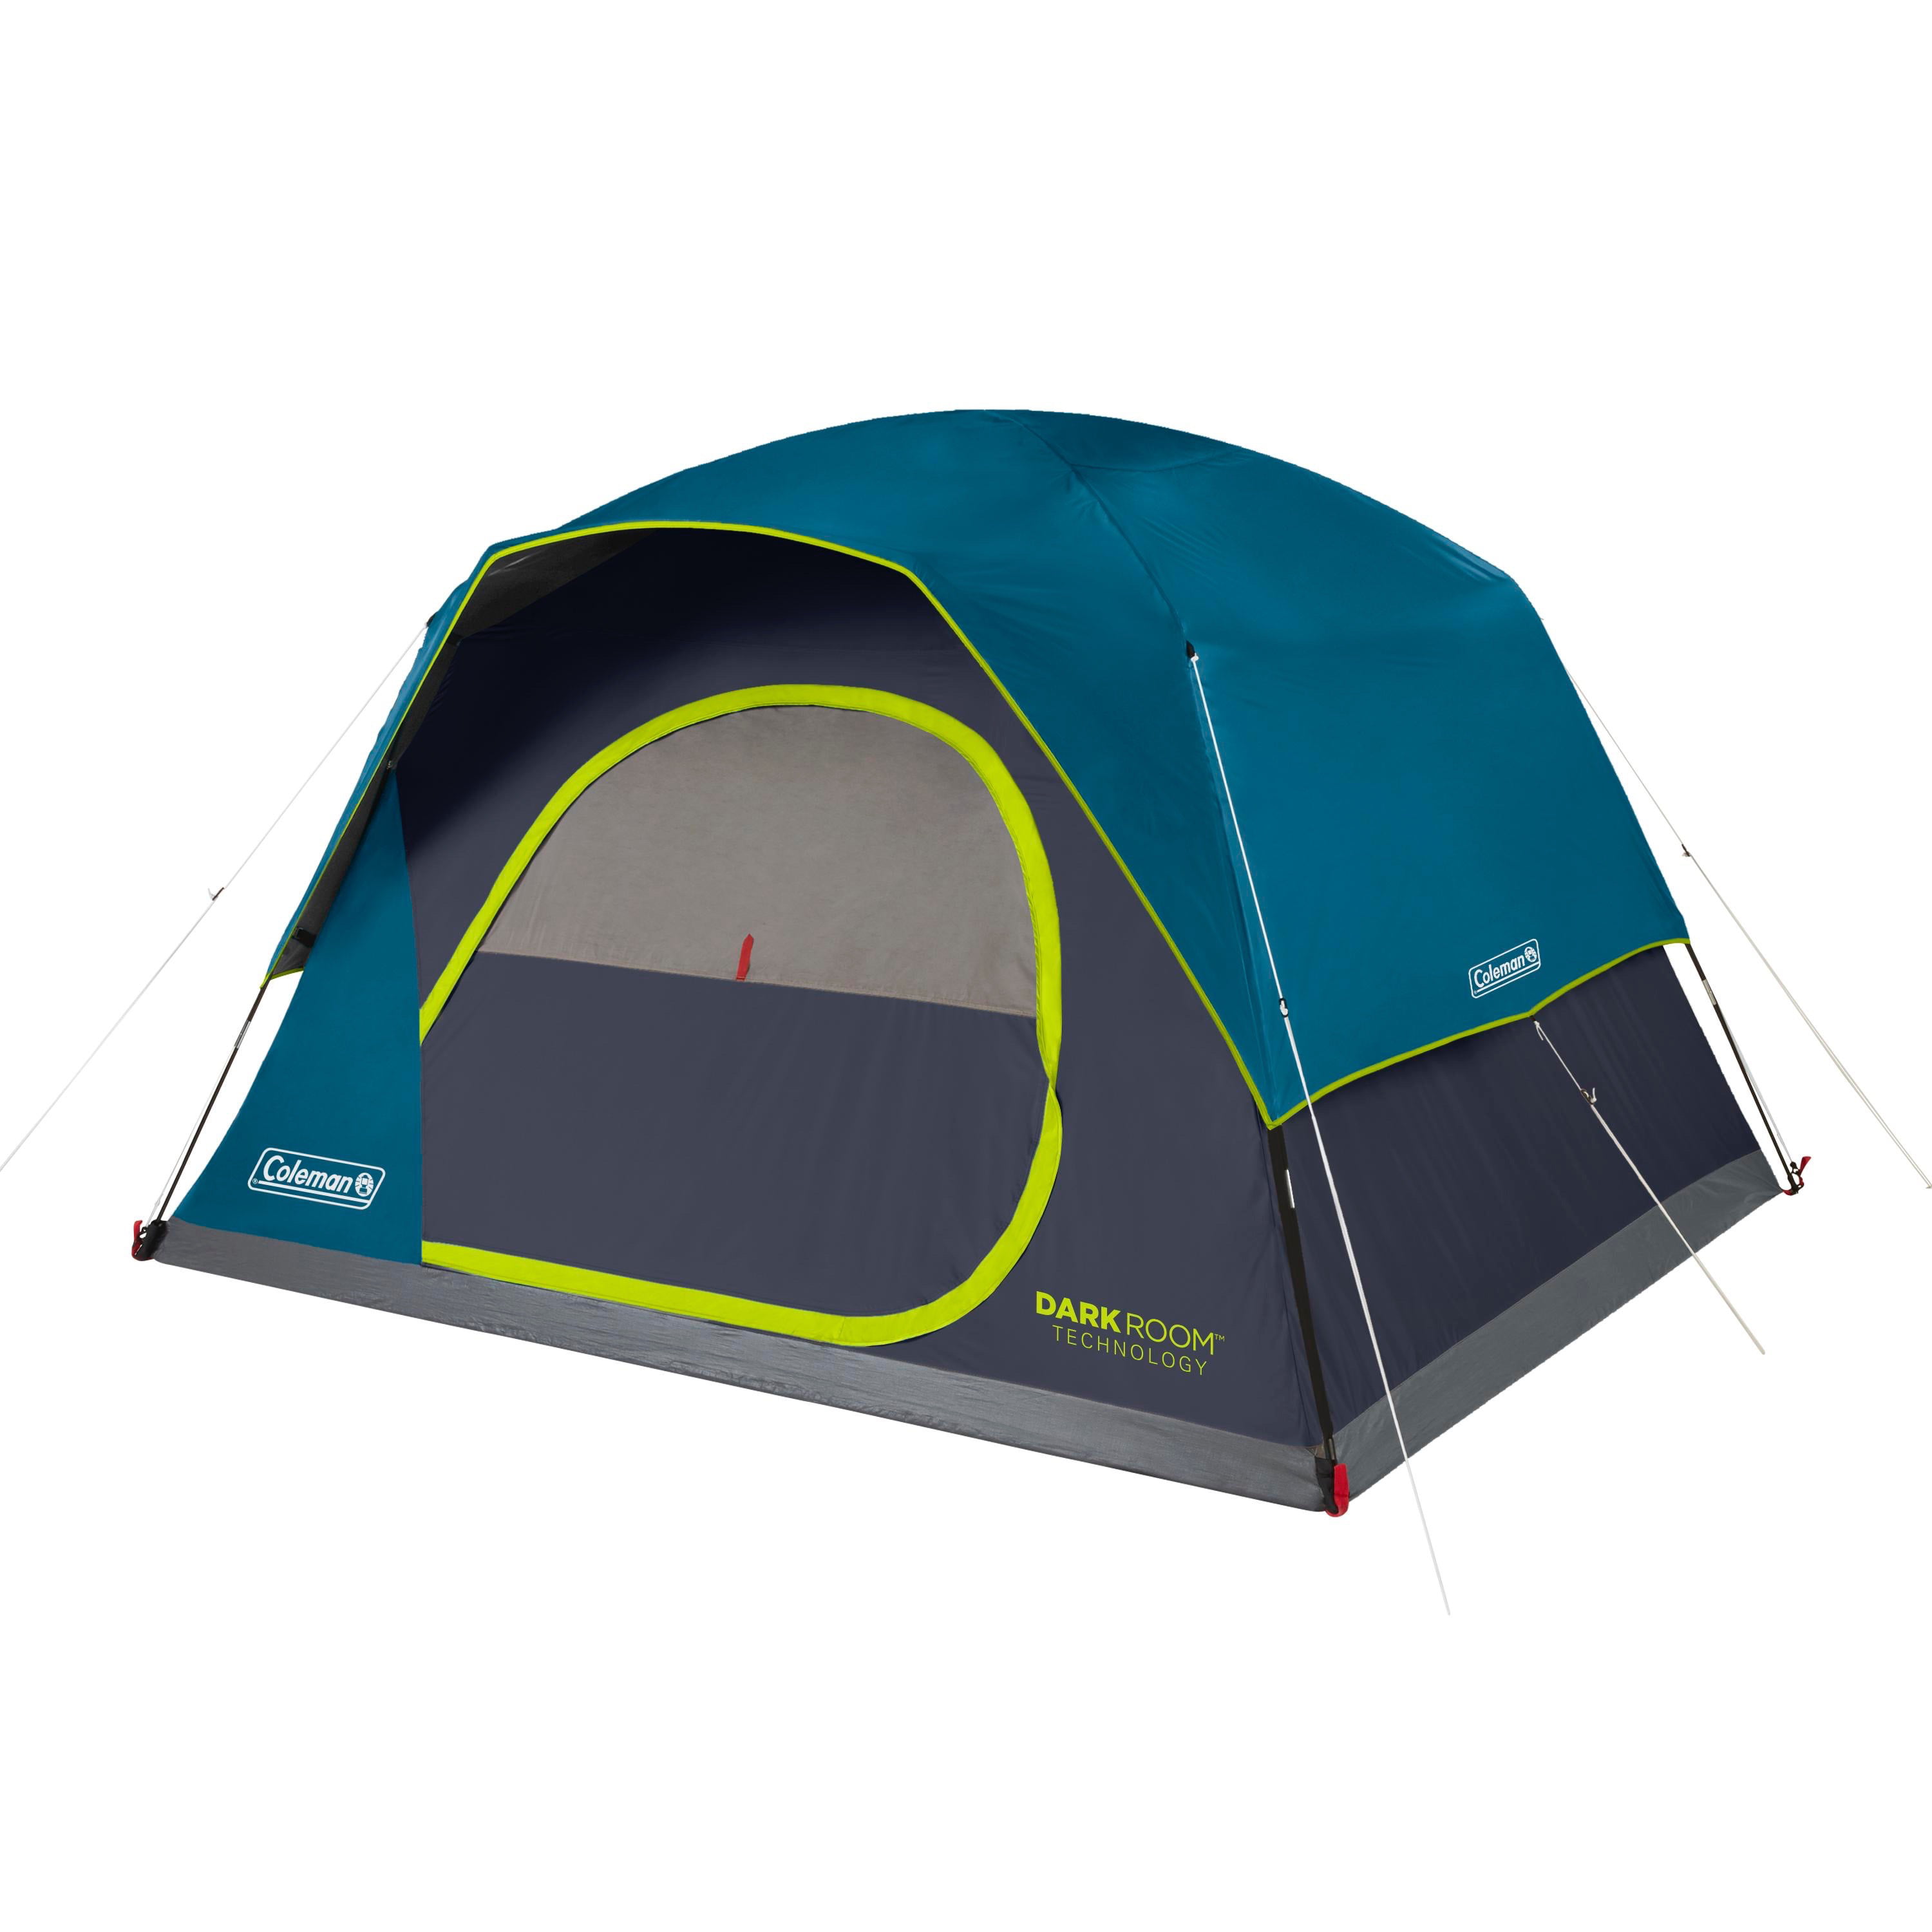 Coleman Camping Tent | 6 Person Dark Room Skydome Tent, Blue - Walmart